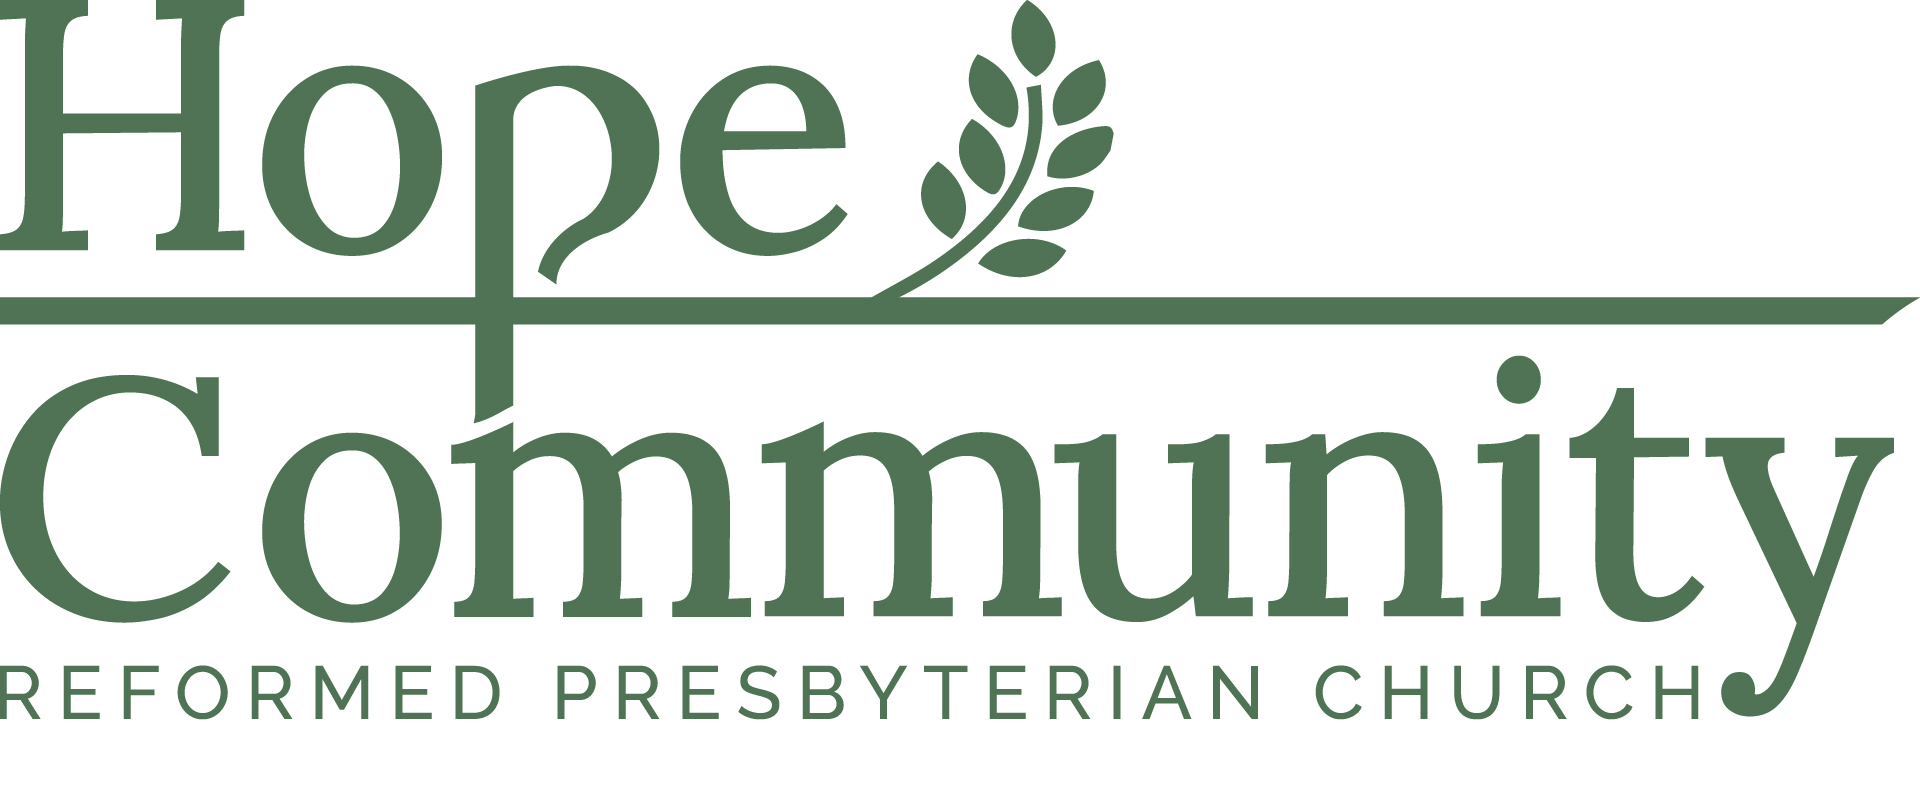 Hope Community Reformed Presbyterian Church